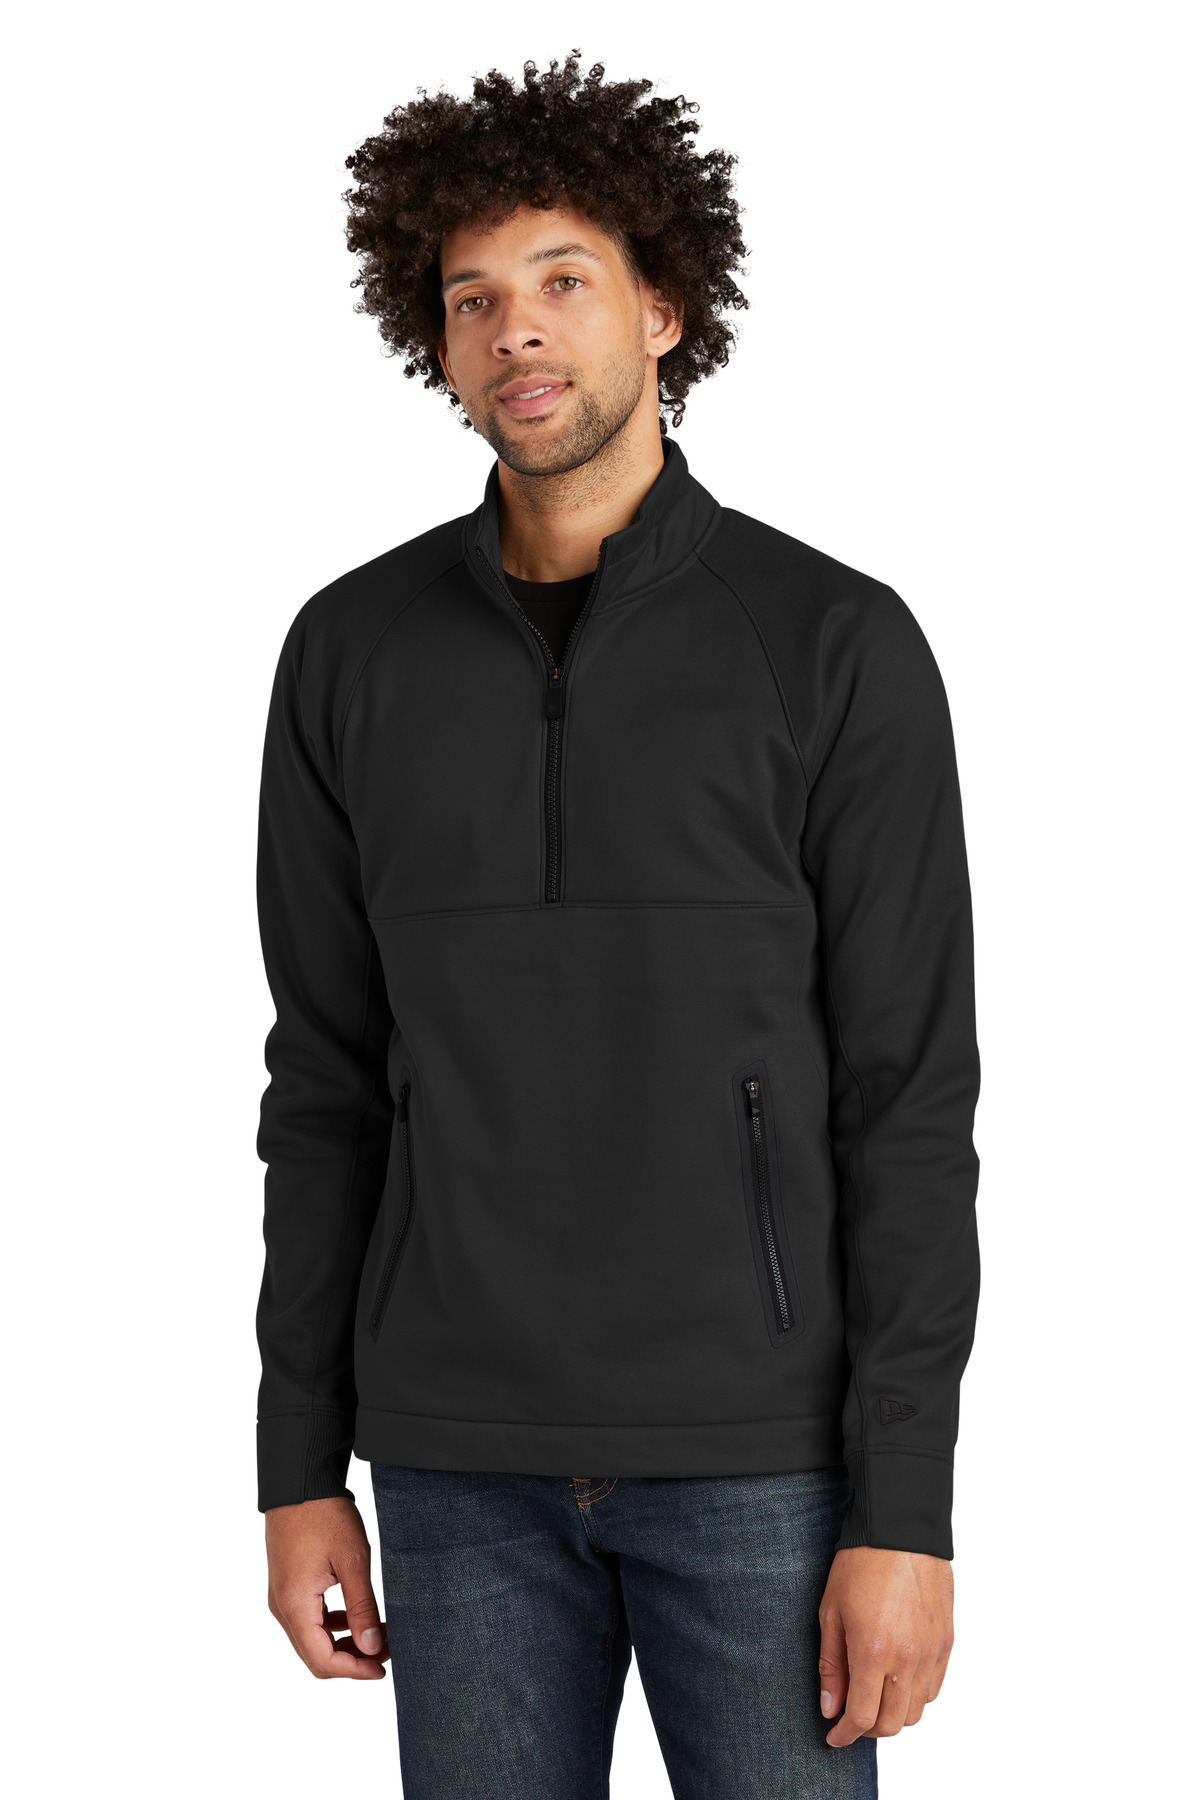 New Era Hospitality Sweatshirts & Fleece ® Venue Fleece 1/4-Zip Pullover.-New Era